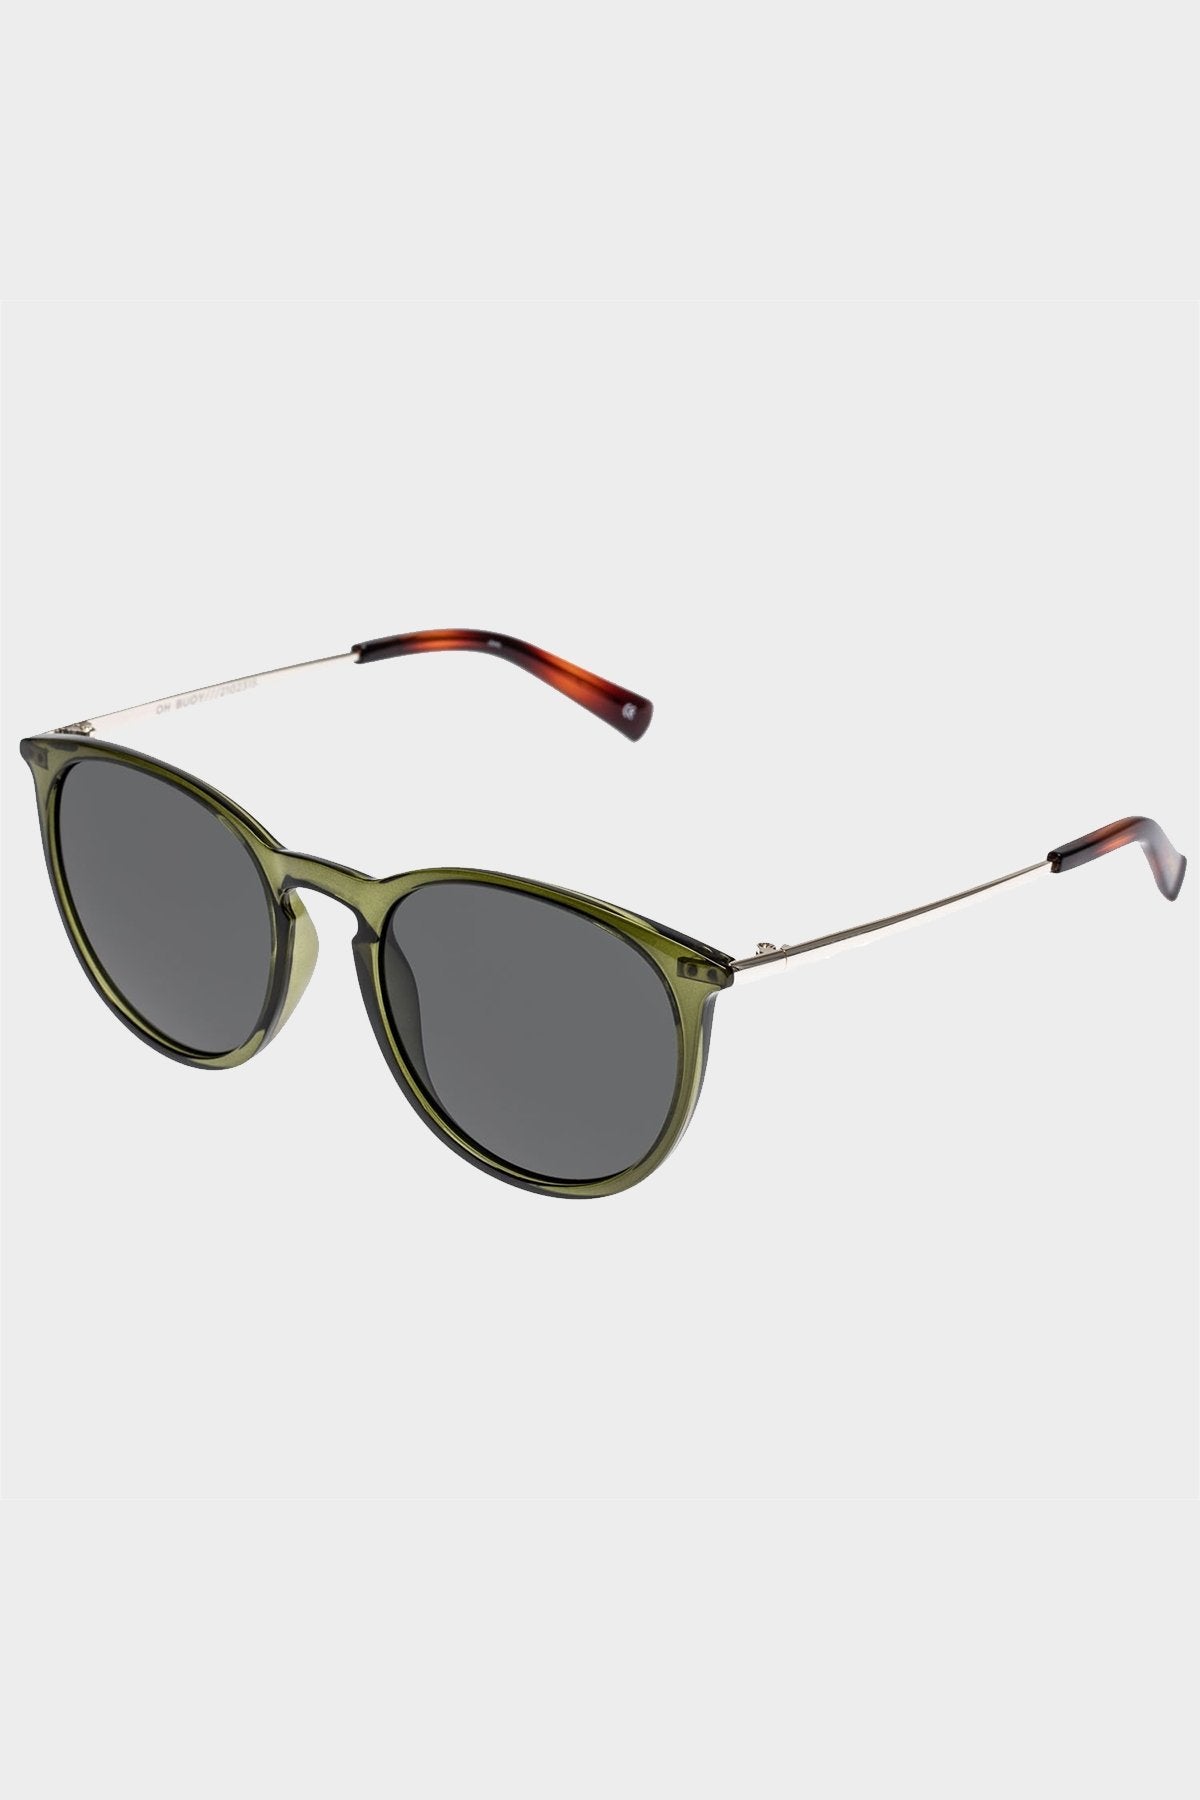 Oh Buoy Sunglasses in Khaki Gold - shop-olivia.com